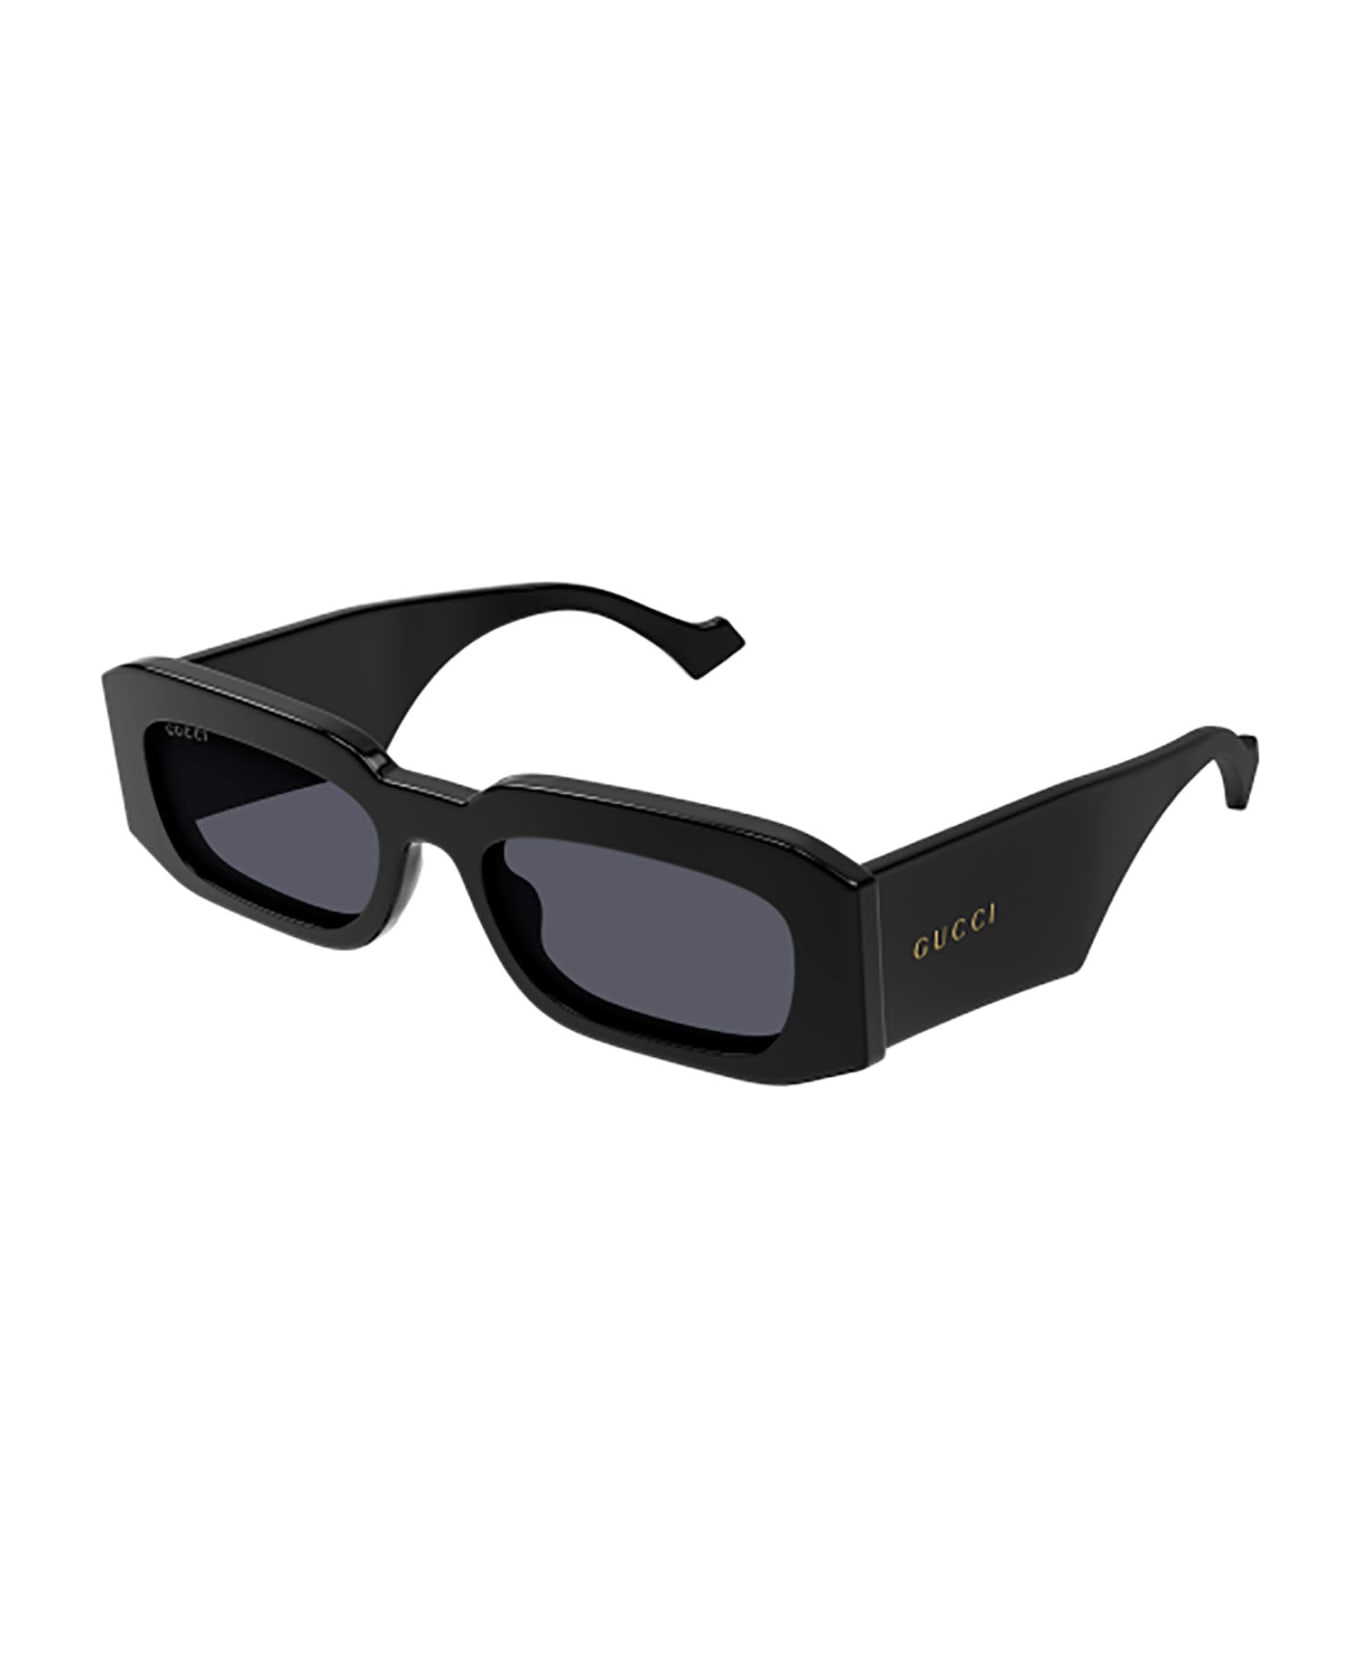 Gucci Eyewear GG1426S Sunglasses - Black Black Grey サングラス